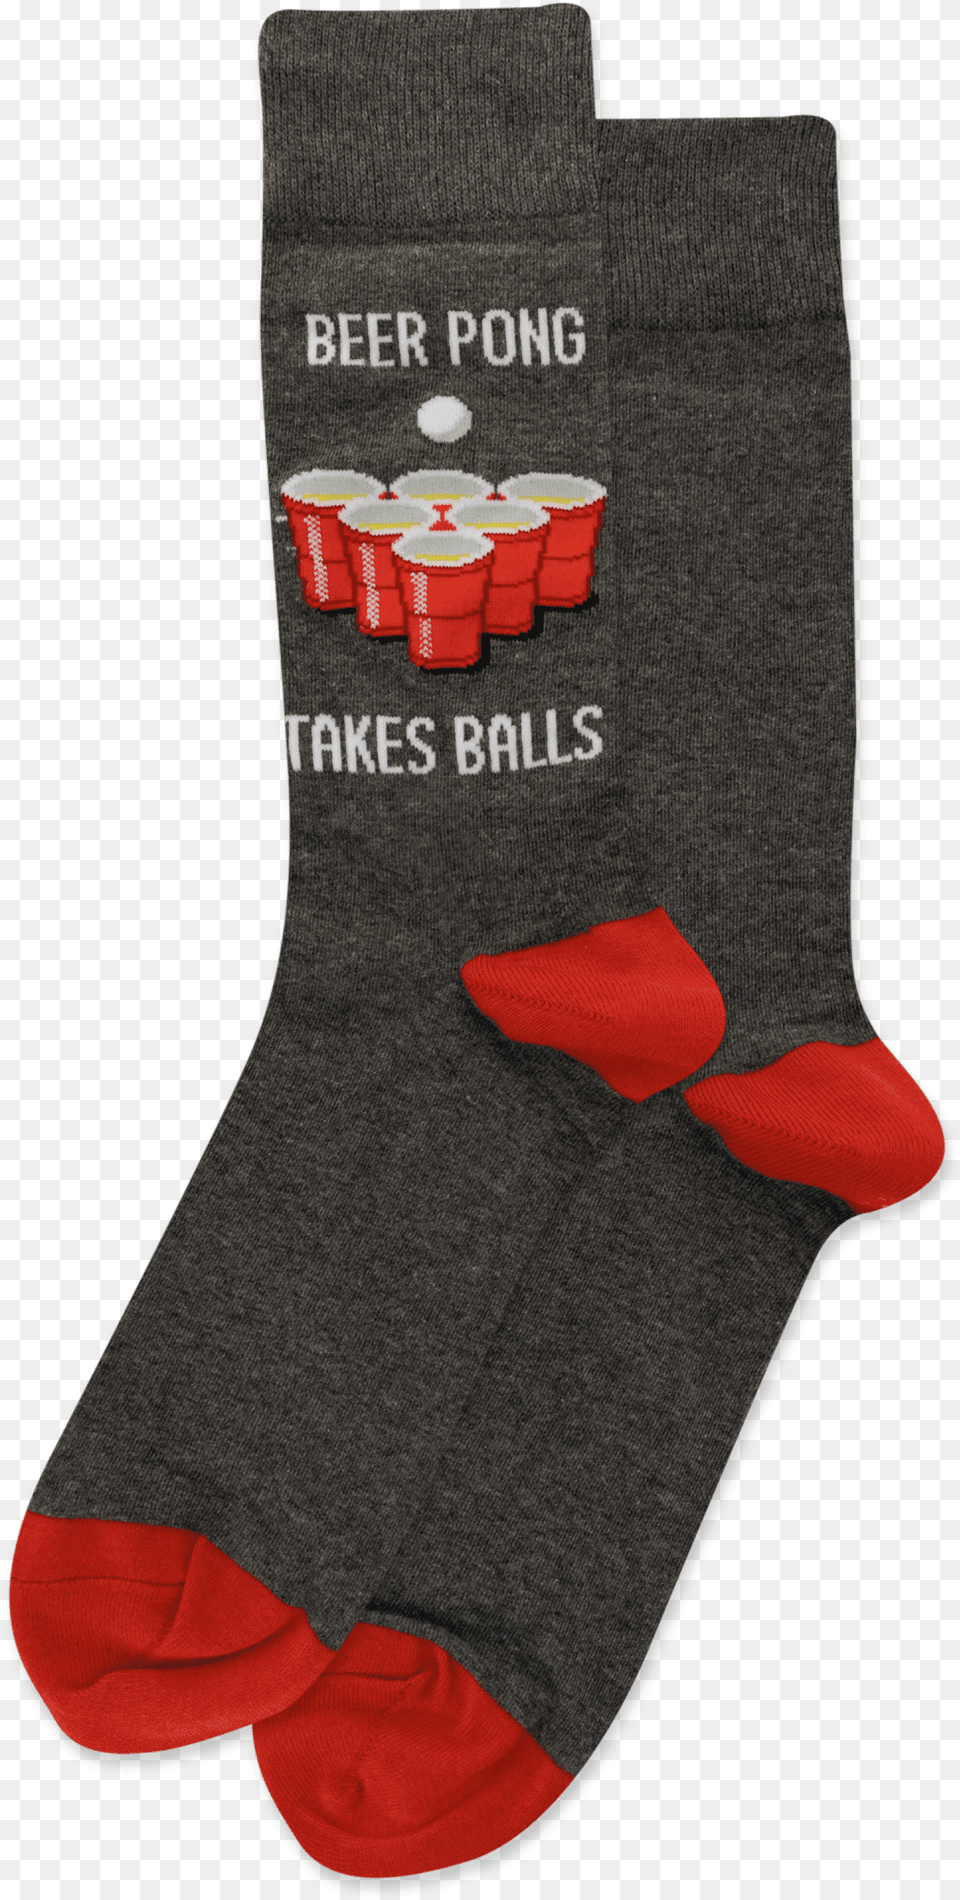 Men S Beer Pong Crew Socksclass Slick Lazy Image Sock, Clothing, Hosiery, Christmas, Christmas Decorations Png